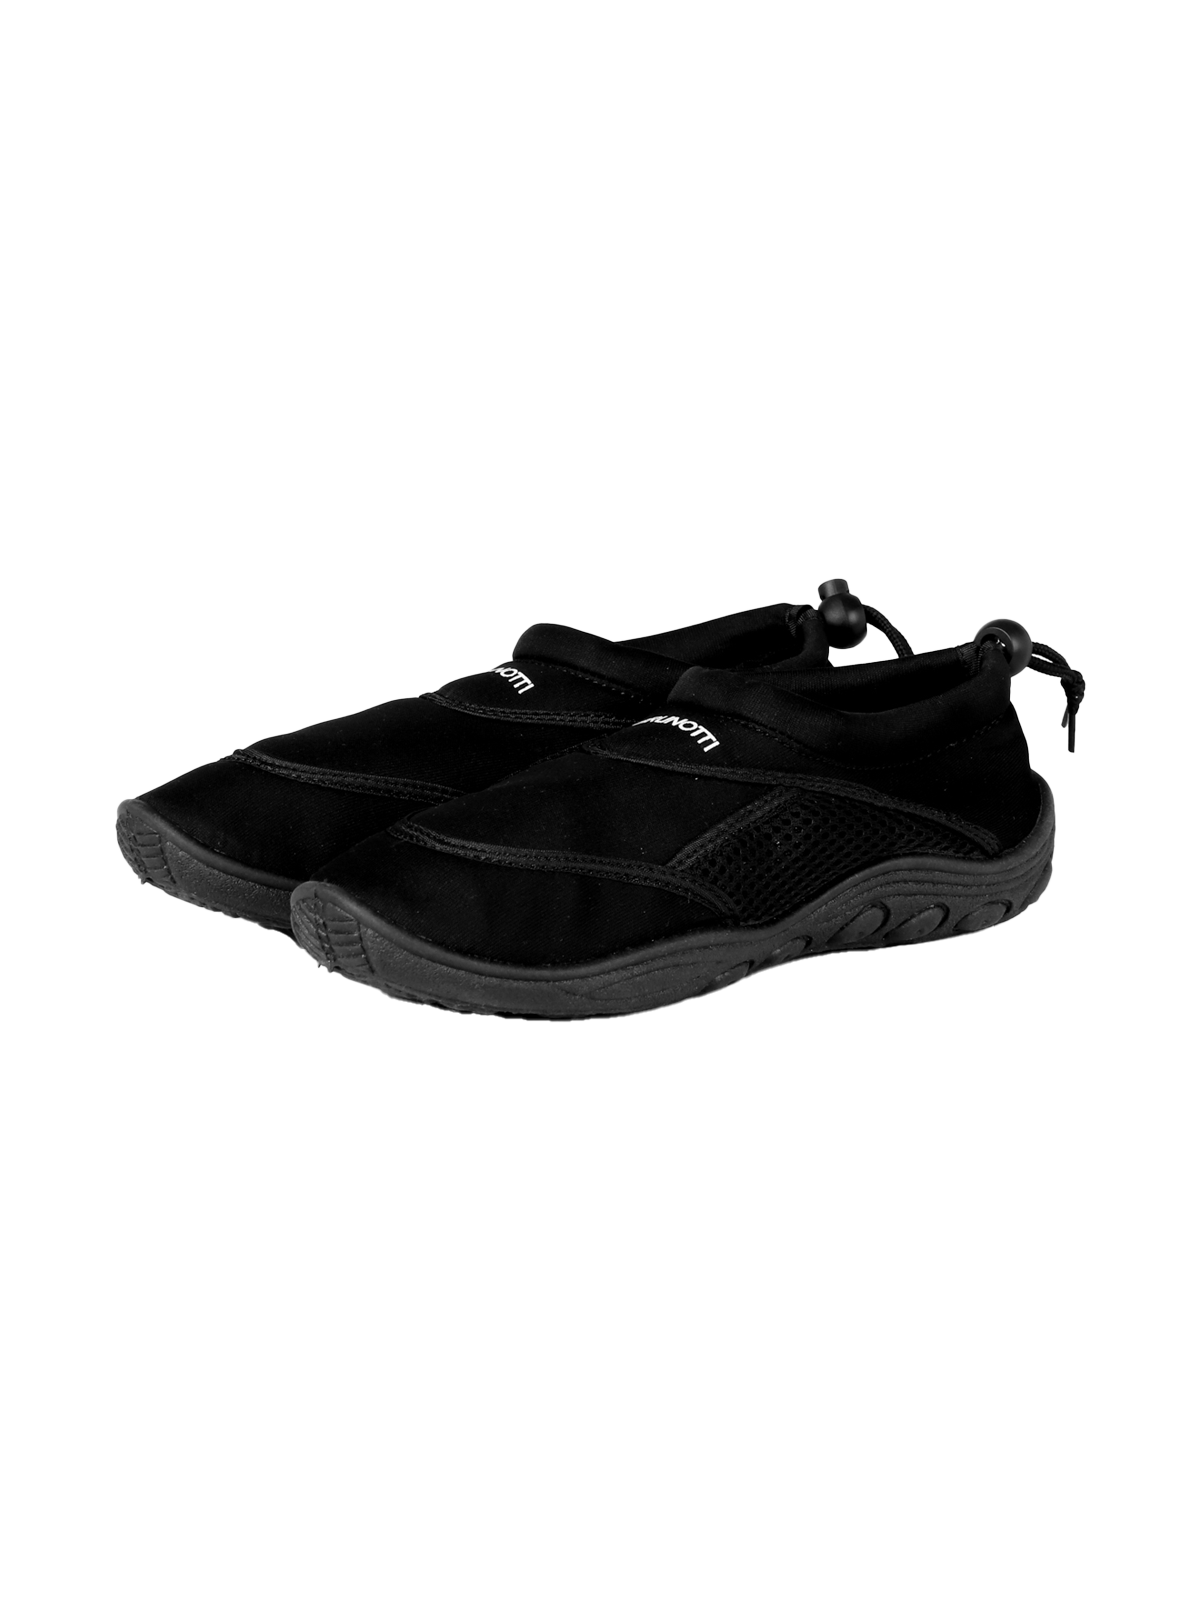 Paddles-JR Unisex Kids Water Shoe | Black